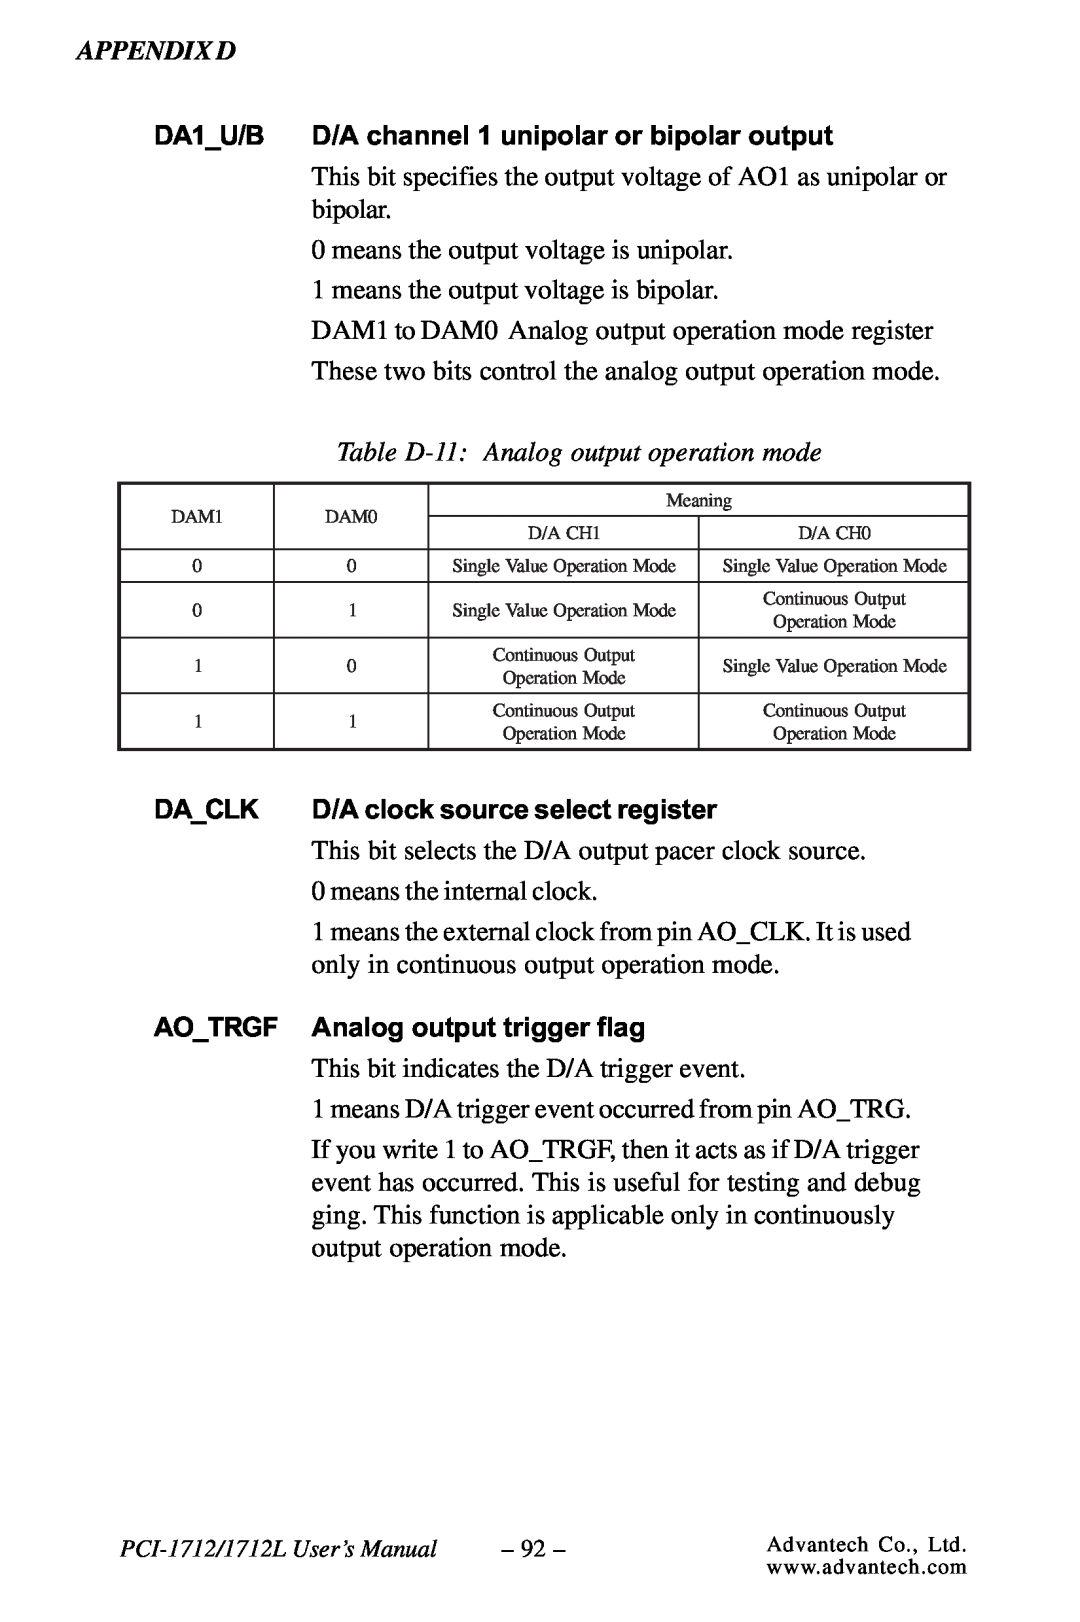 Konica Minolta PCI-1712 Table D-11 Analog output operation mode, DA1U/B, D/A channel 1 unipolar or bipolar output, Daclk 